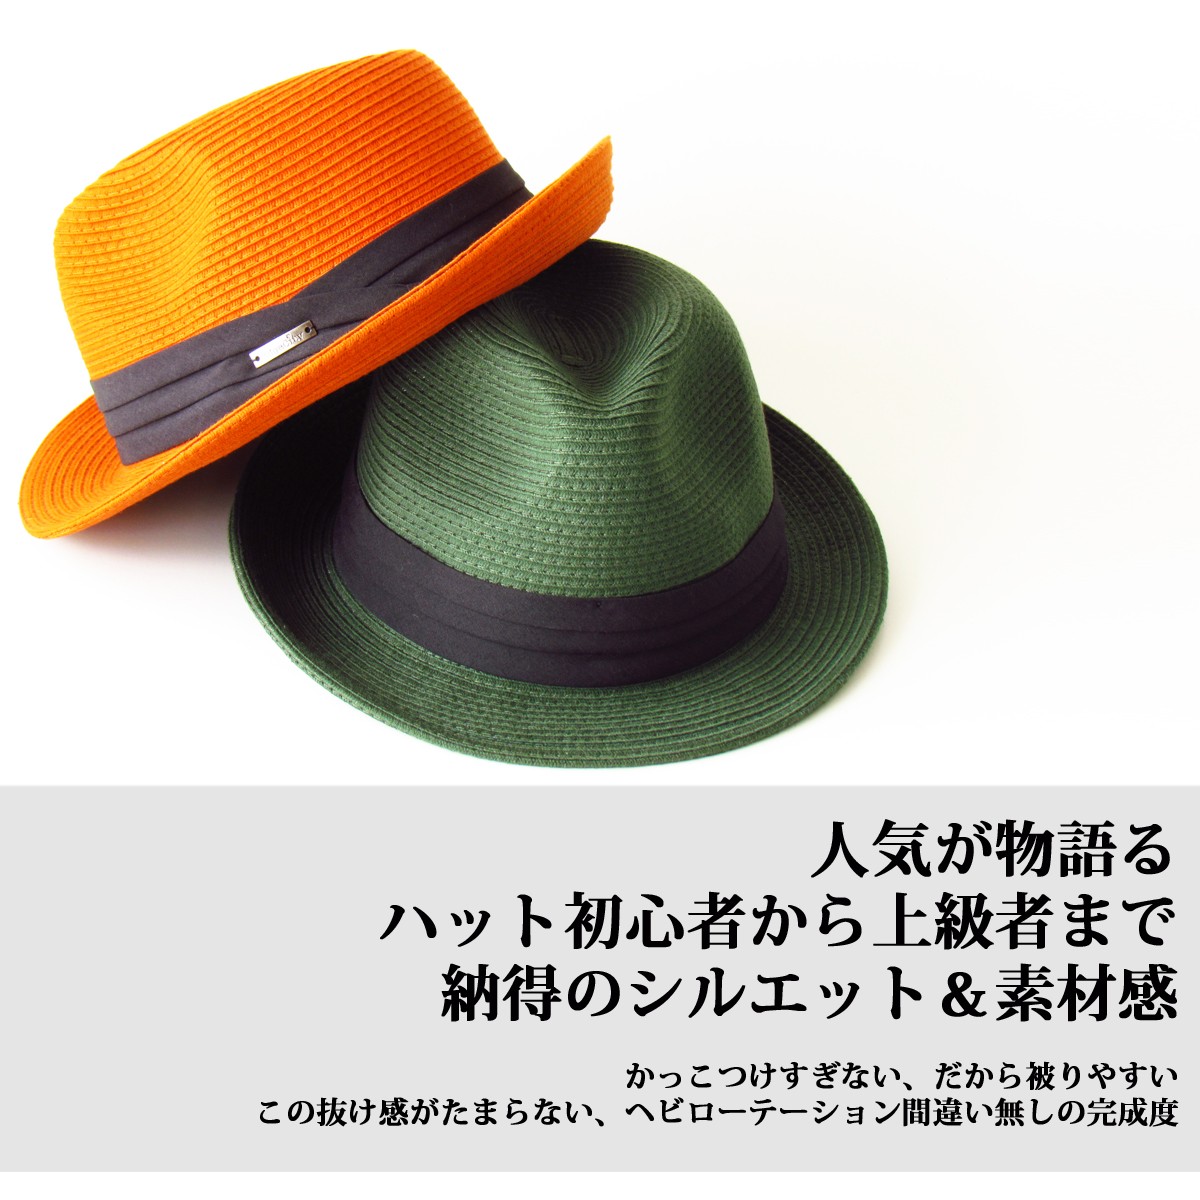  мягкая шляпа шляпа женский большой размер соломинка шляпа женский мужской большой размер соломенная шляпа мужской большой размер соломенная шляпа женский 